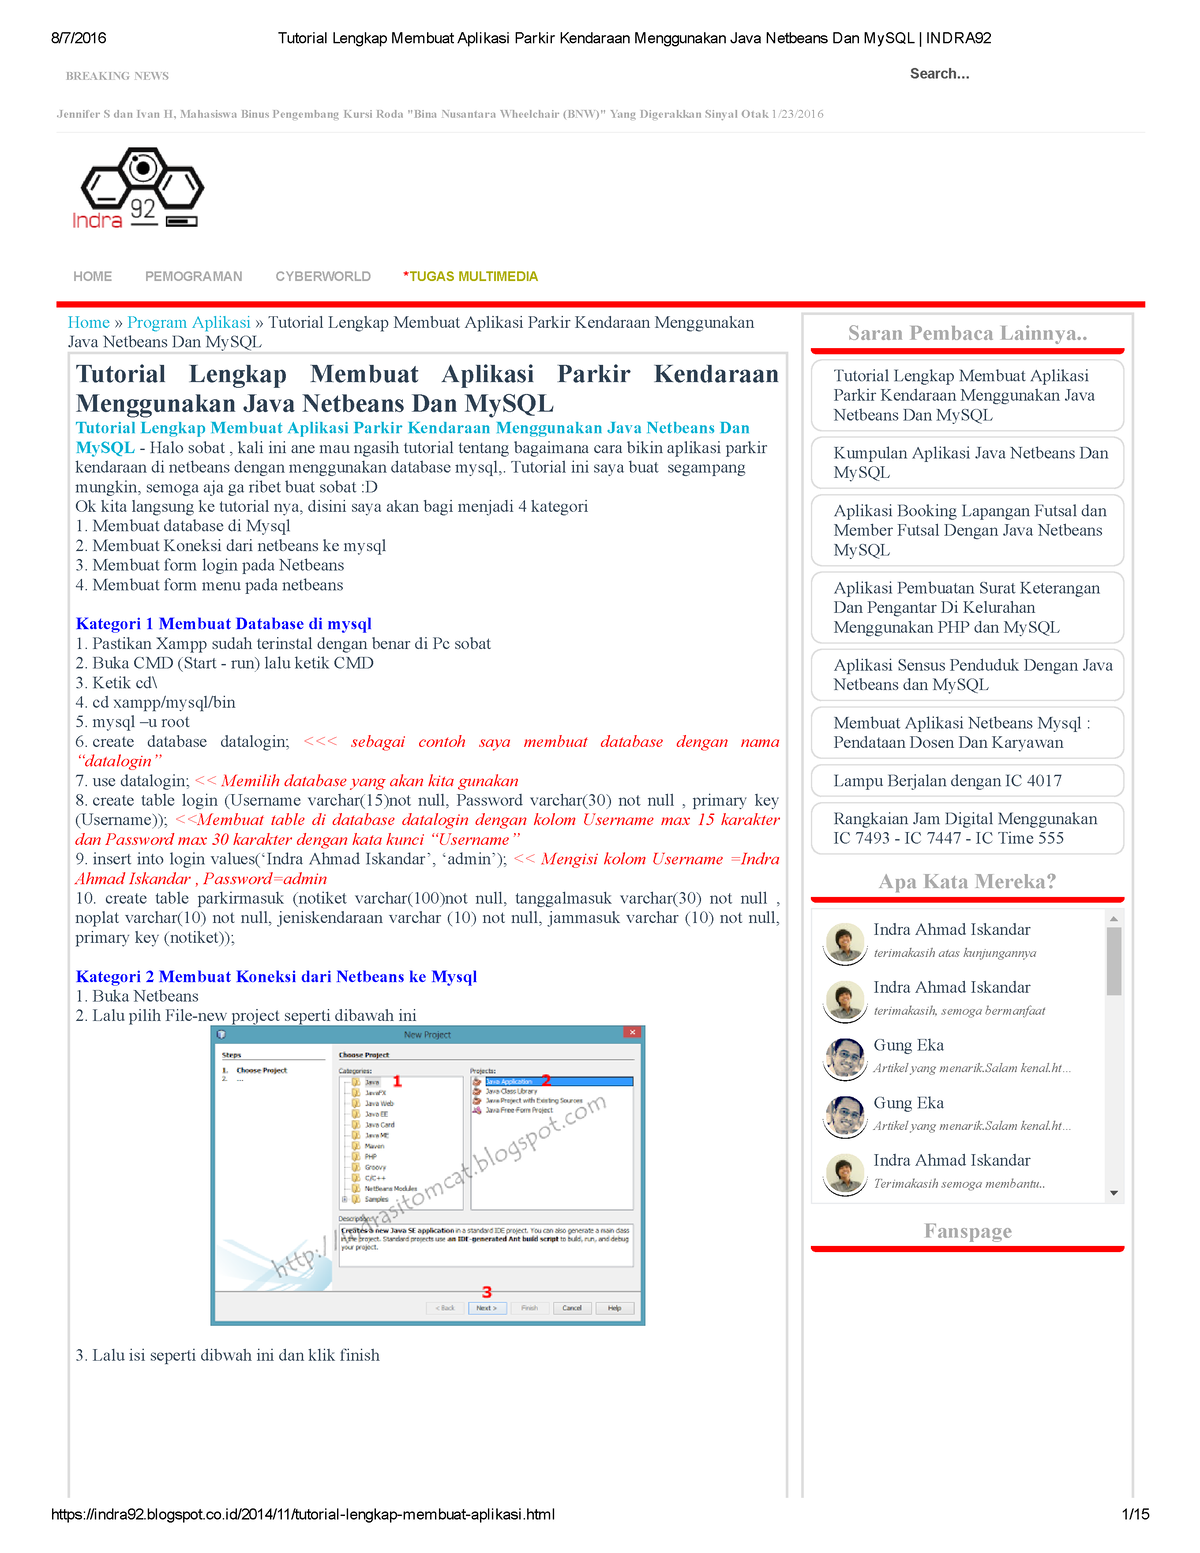 Tutorial Lengkap Membuat Aplikasi Parkir Kendaraan Menggunakan Java Netbeans Dan My Sql Indra 92 6720